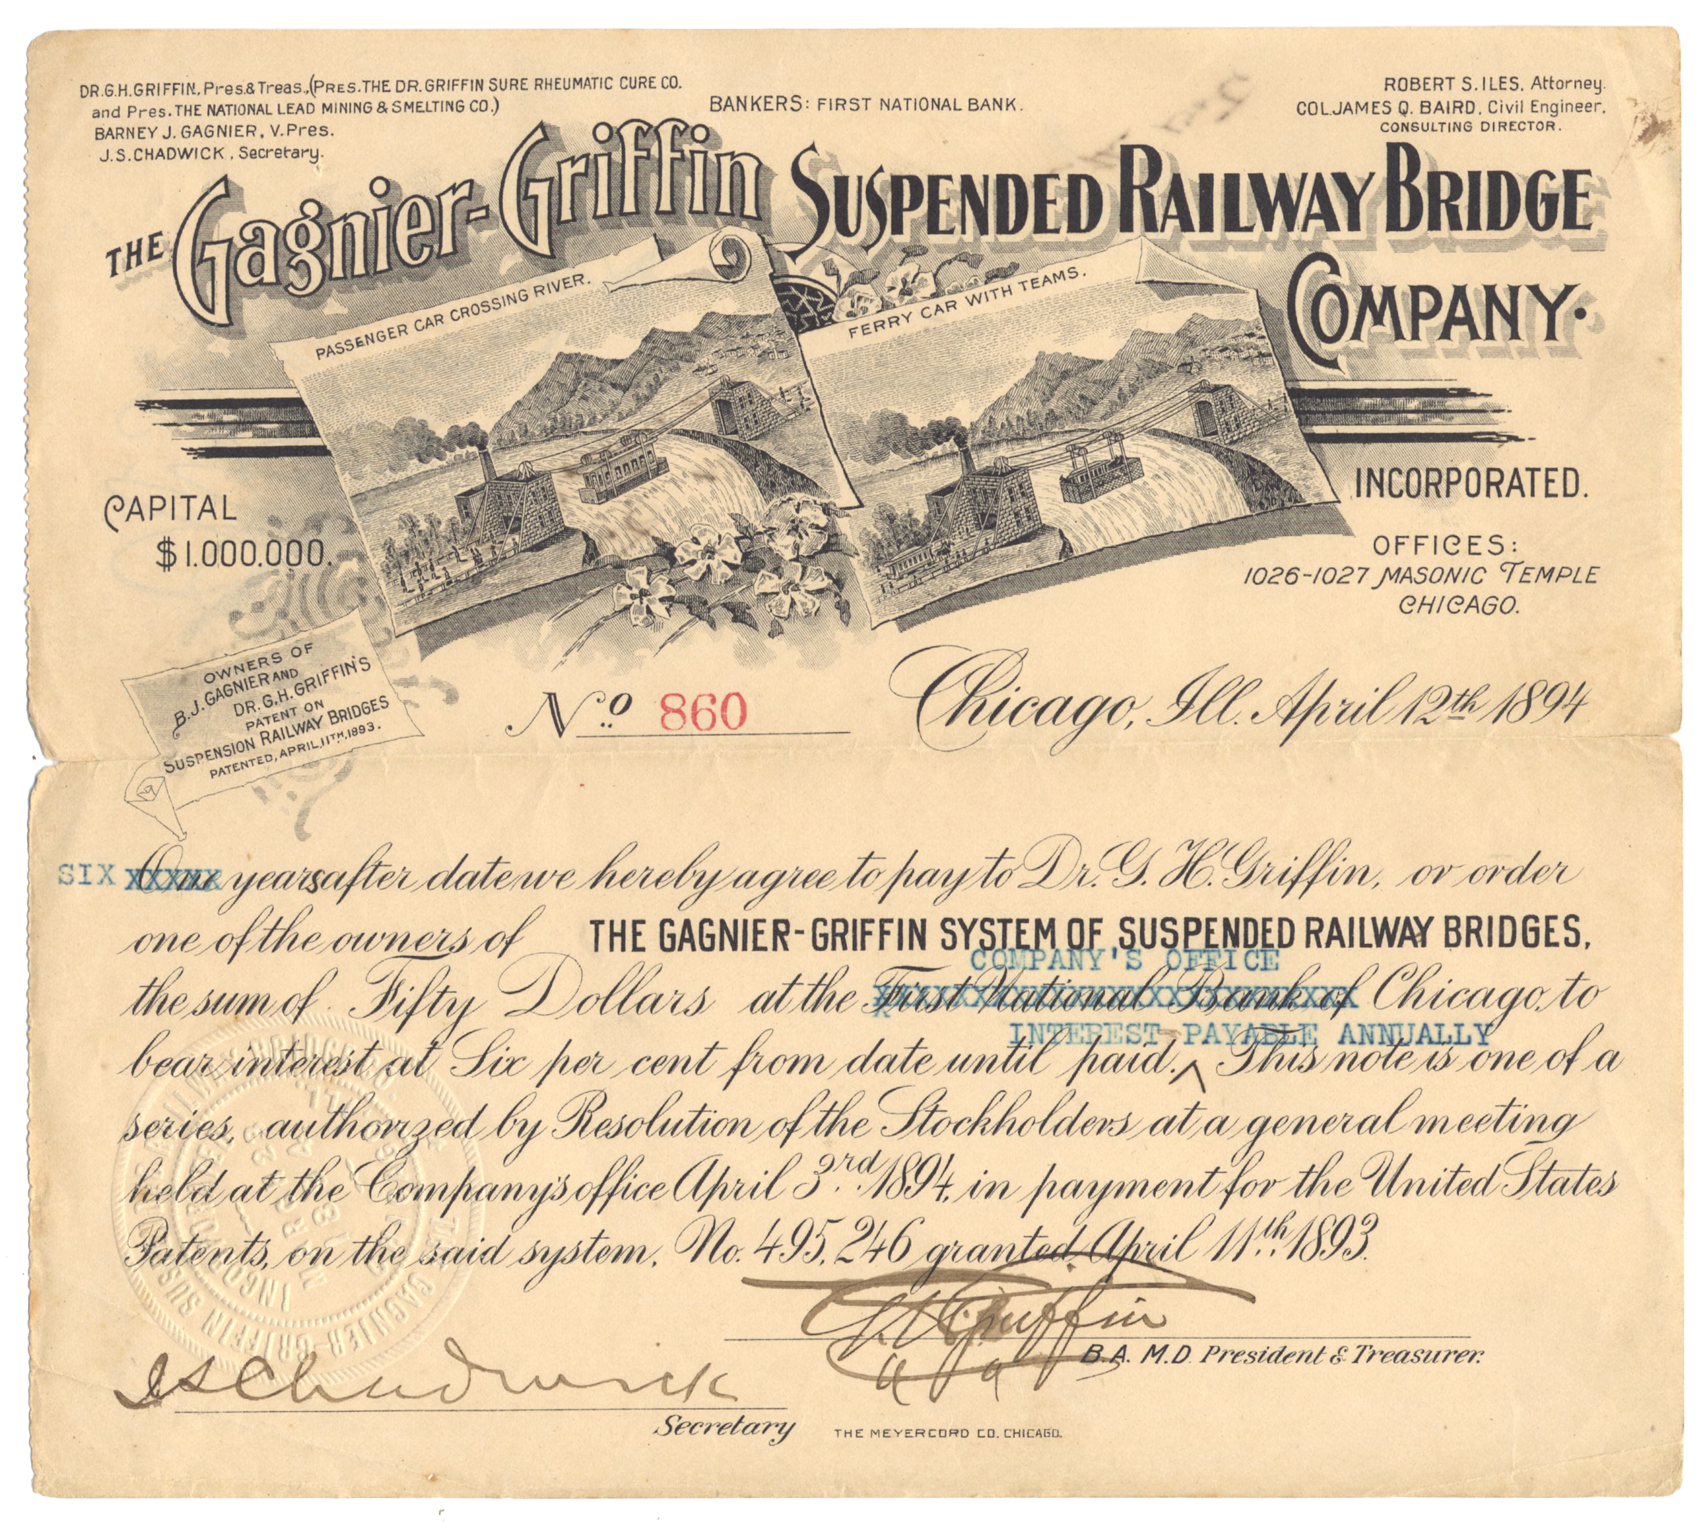 Gagnier-Griffin Suspended Railway Bridge Company, Incorporated Bond Certificate